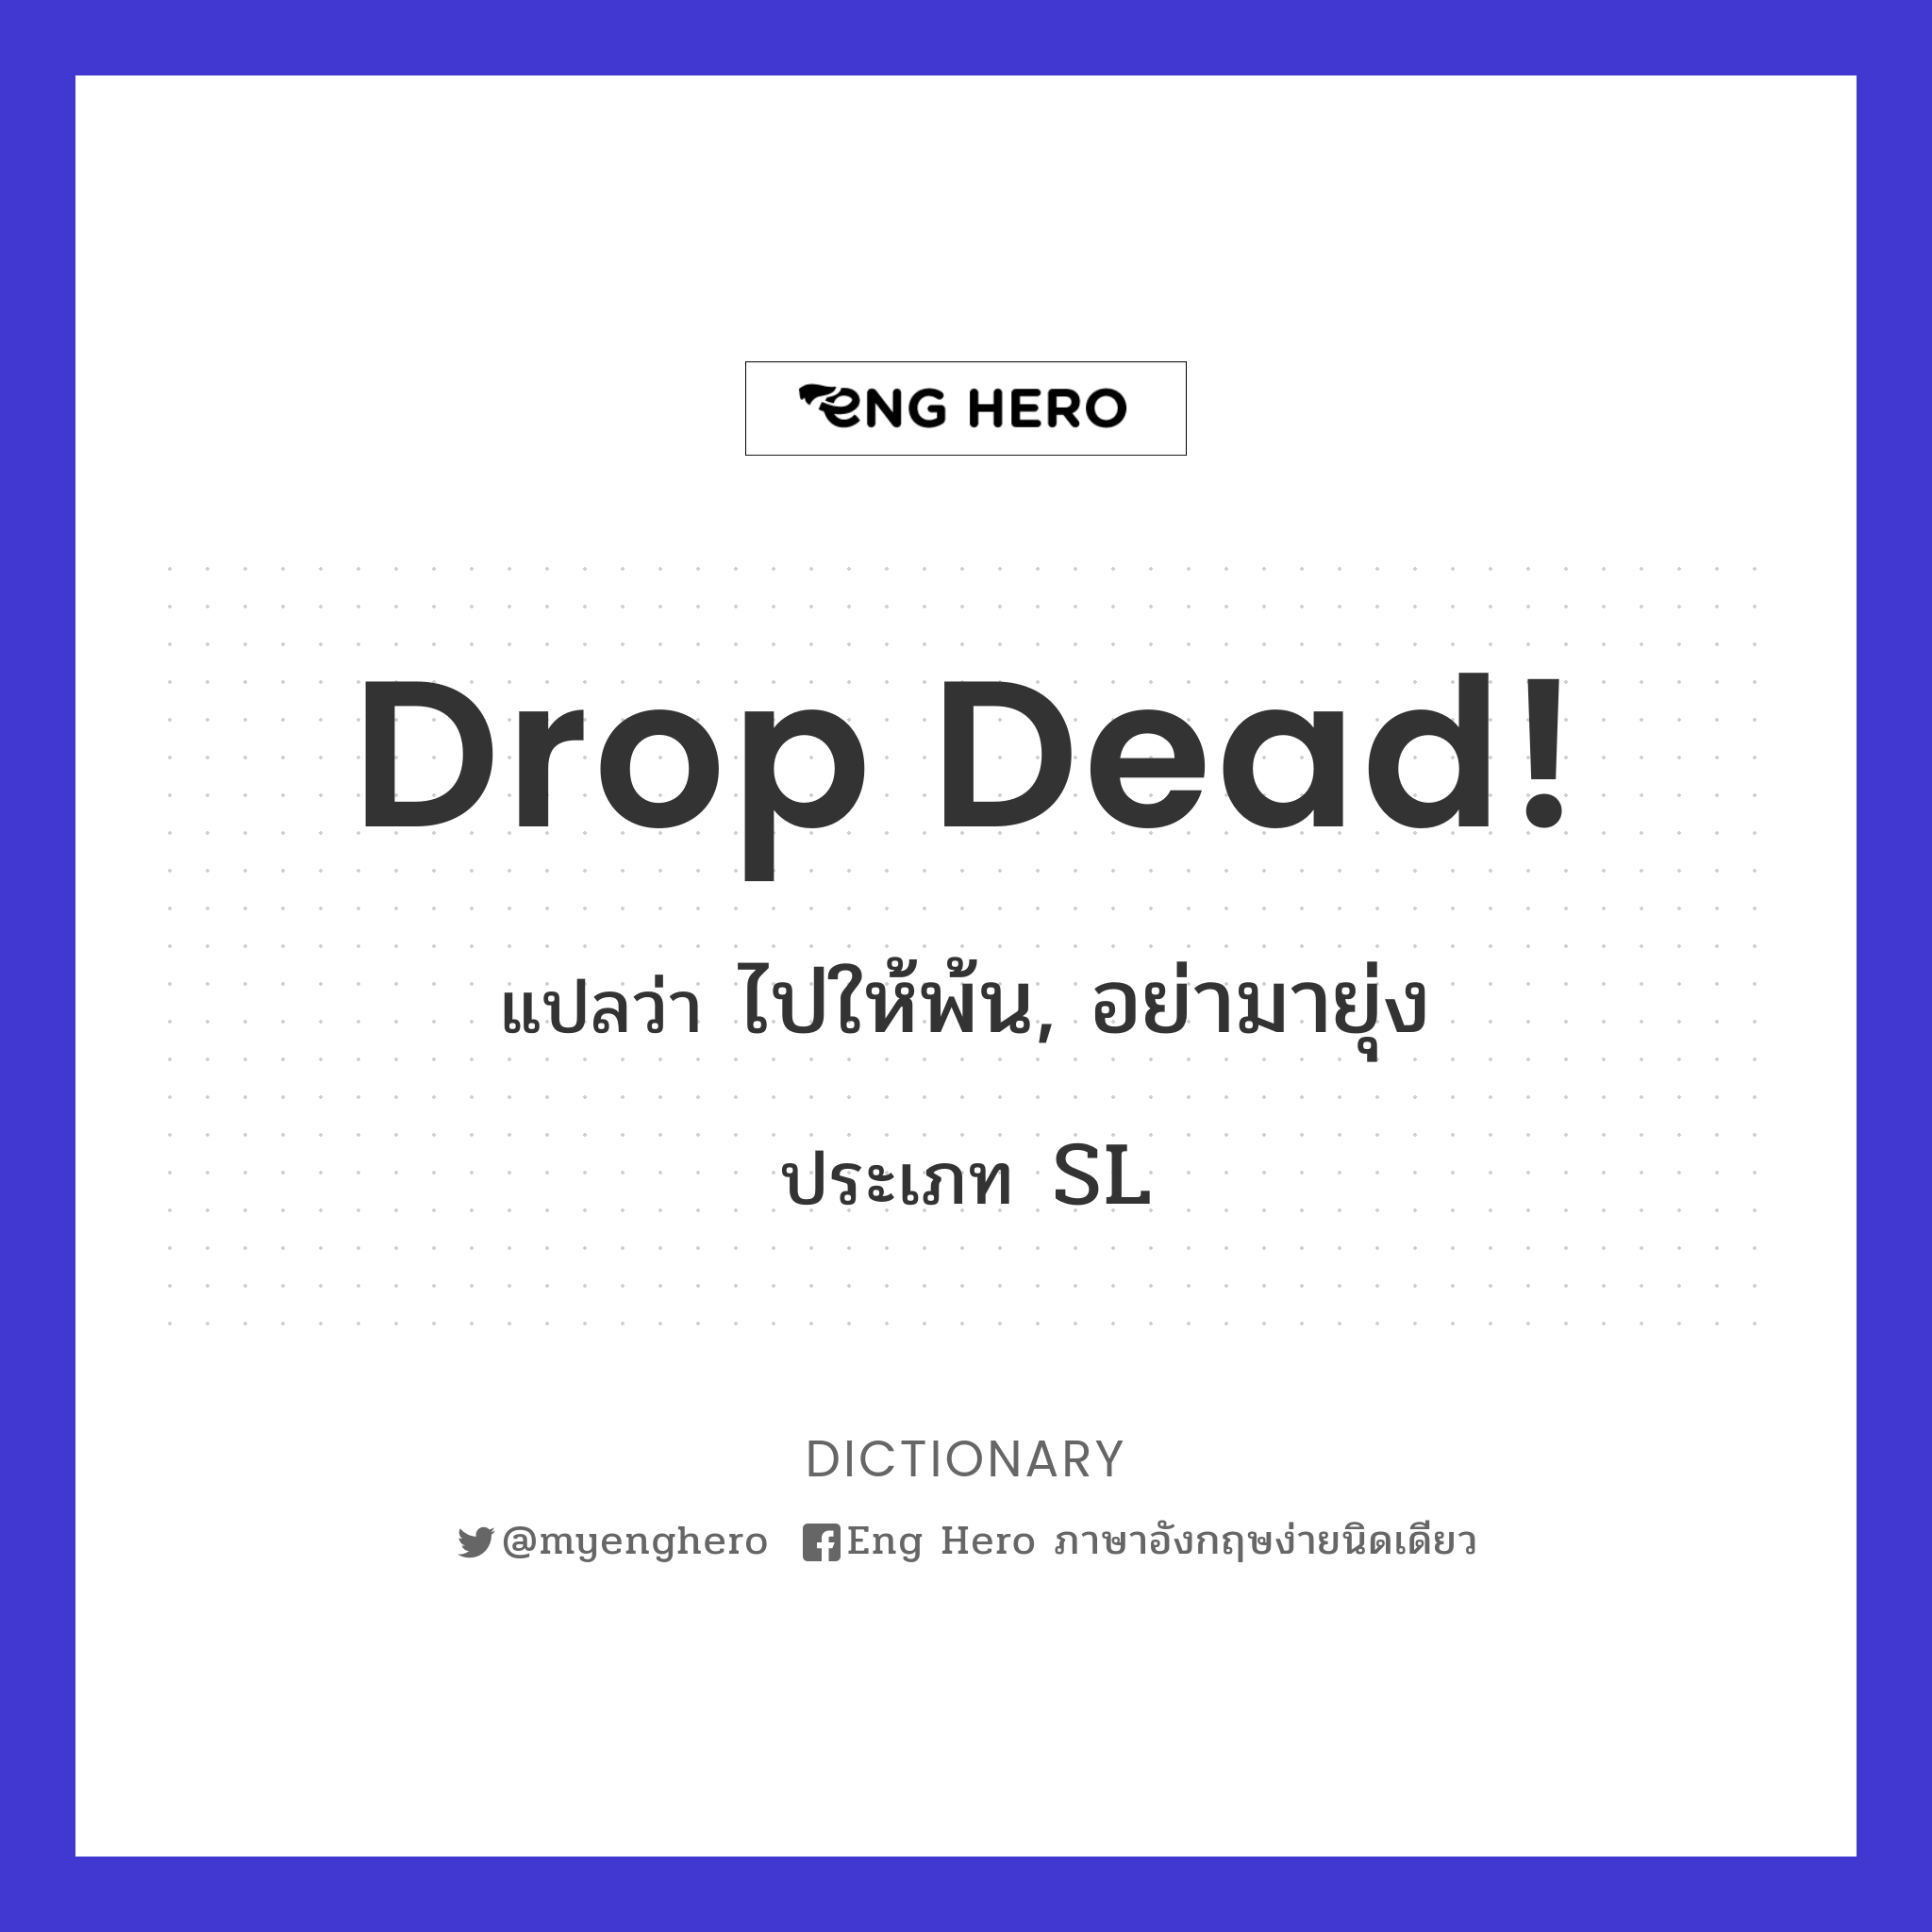 Drop dead!